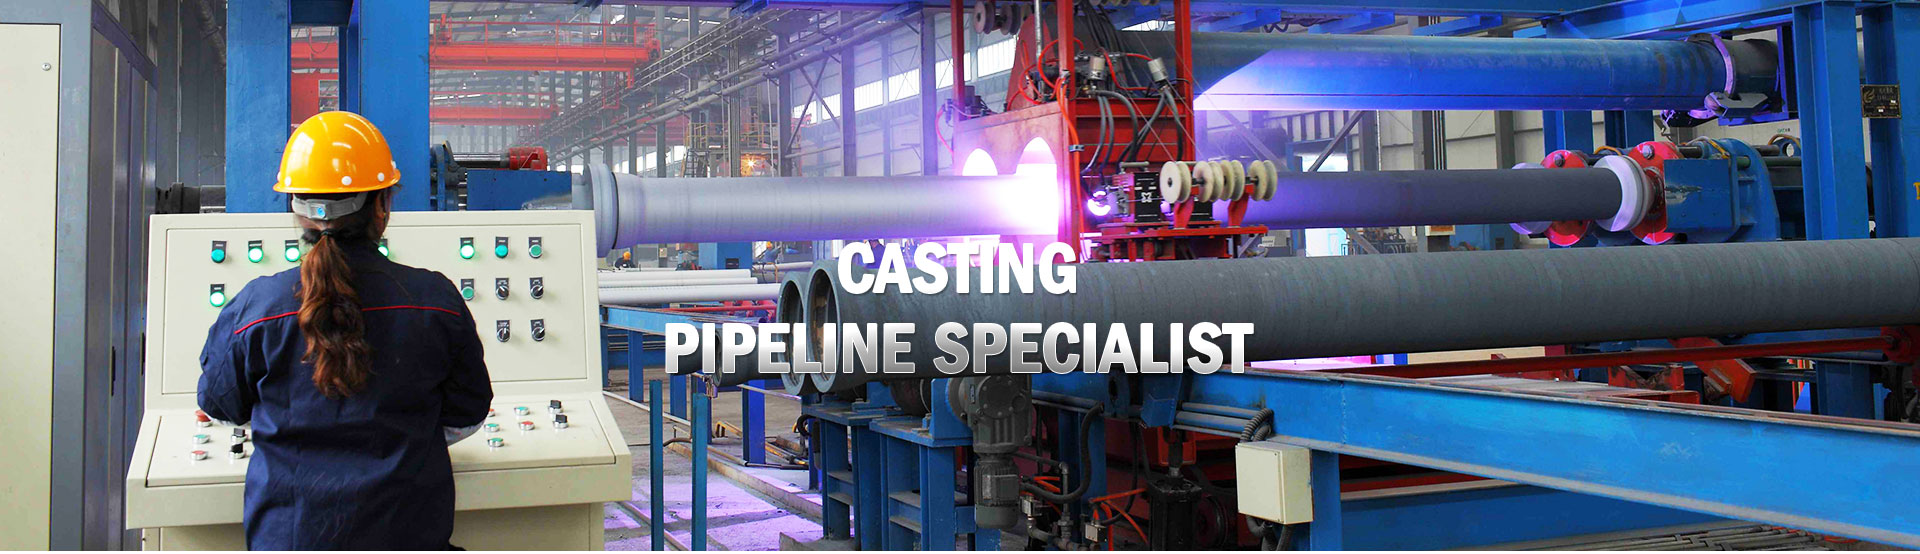 Casting Pipeline